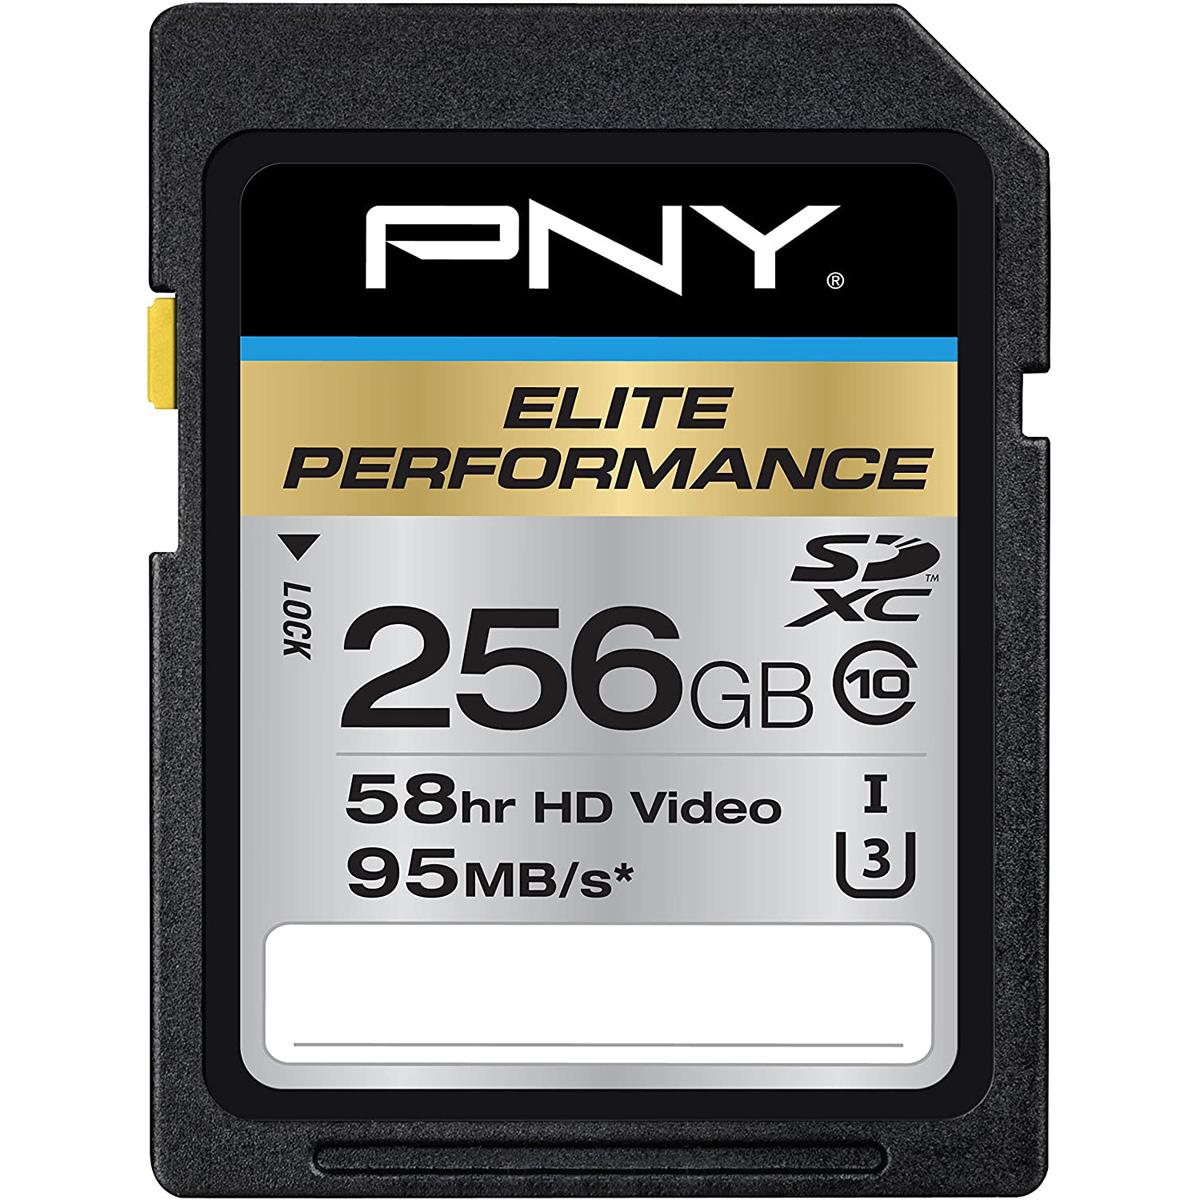 PNY 256GB Elite Performance Class 10 U3 SDXC Flash Memory Card for $31.99 Shipped